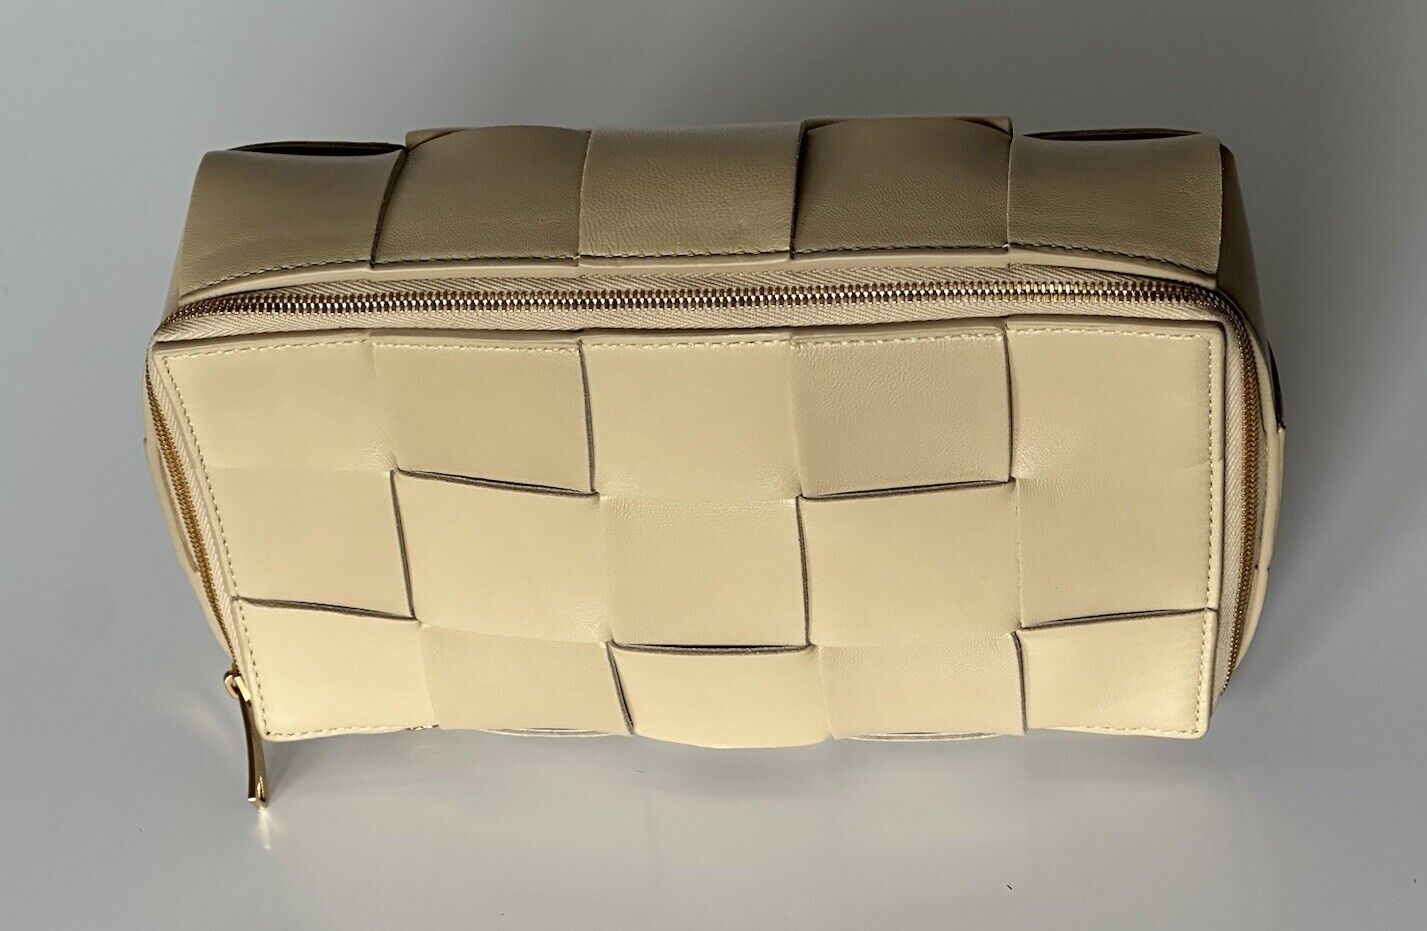 NWT $1250 Bottega Veneta Intrecciato Leather Travel Case Multitan 680212